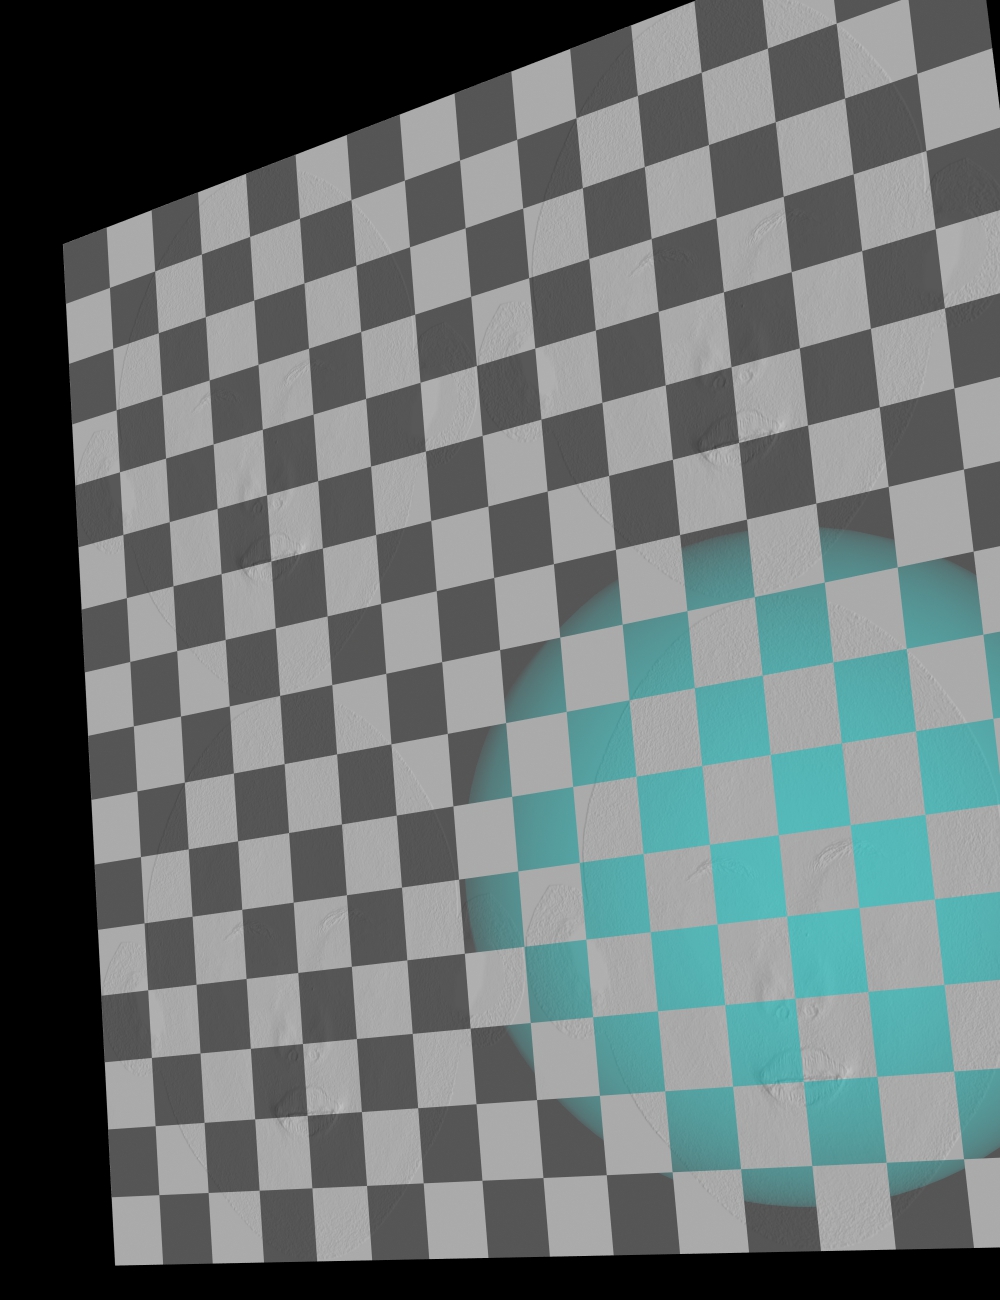 checkers black square now mid grey.jpg